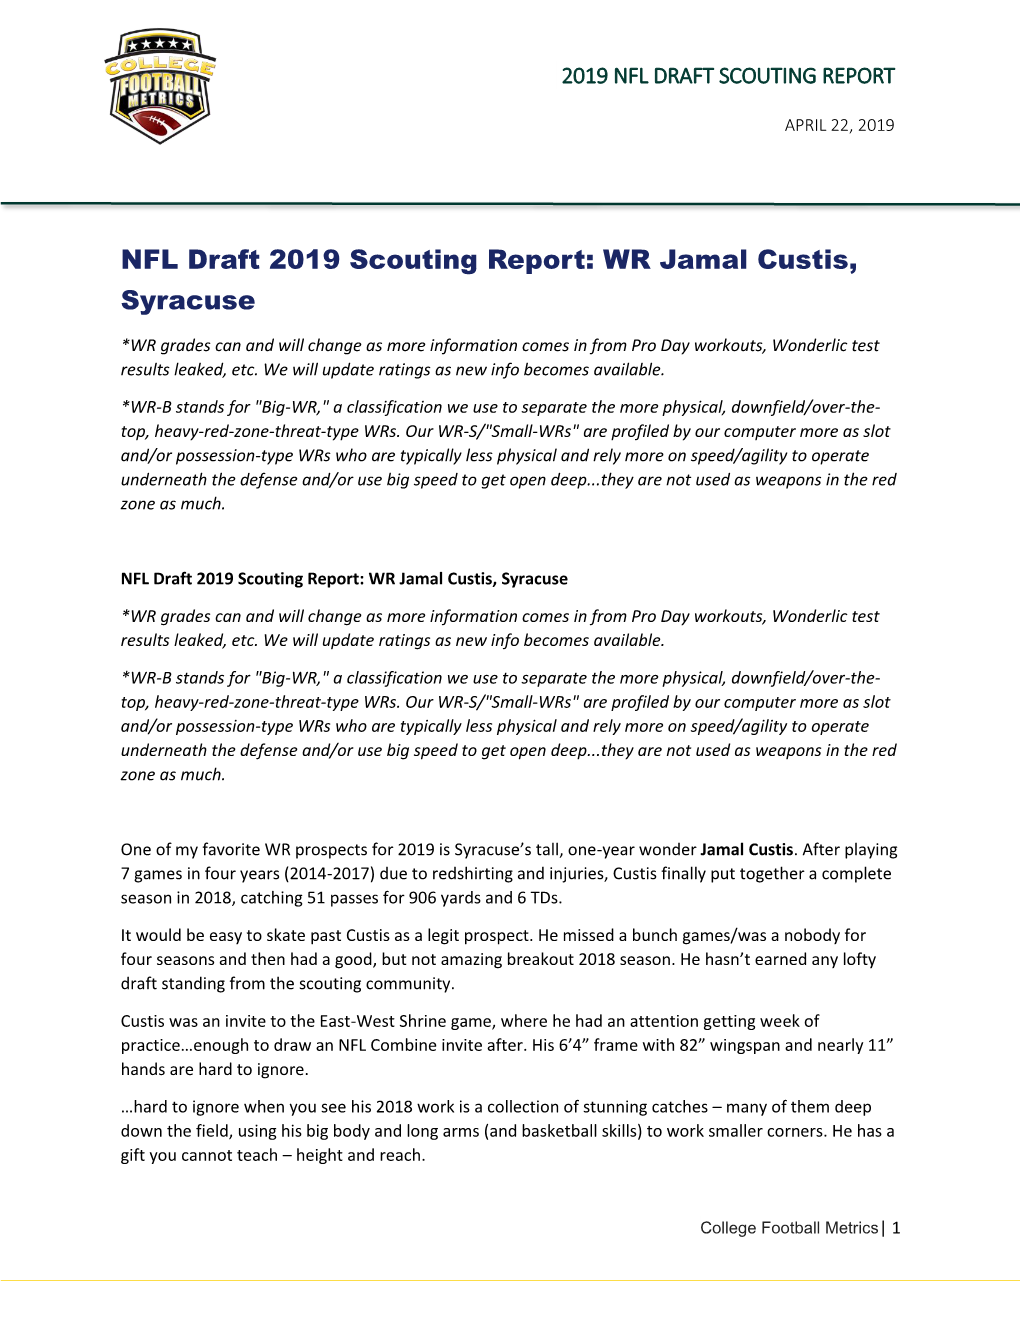 NFL Draft 2019 Scouting Report: WR Jamal Custis, Syracuse